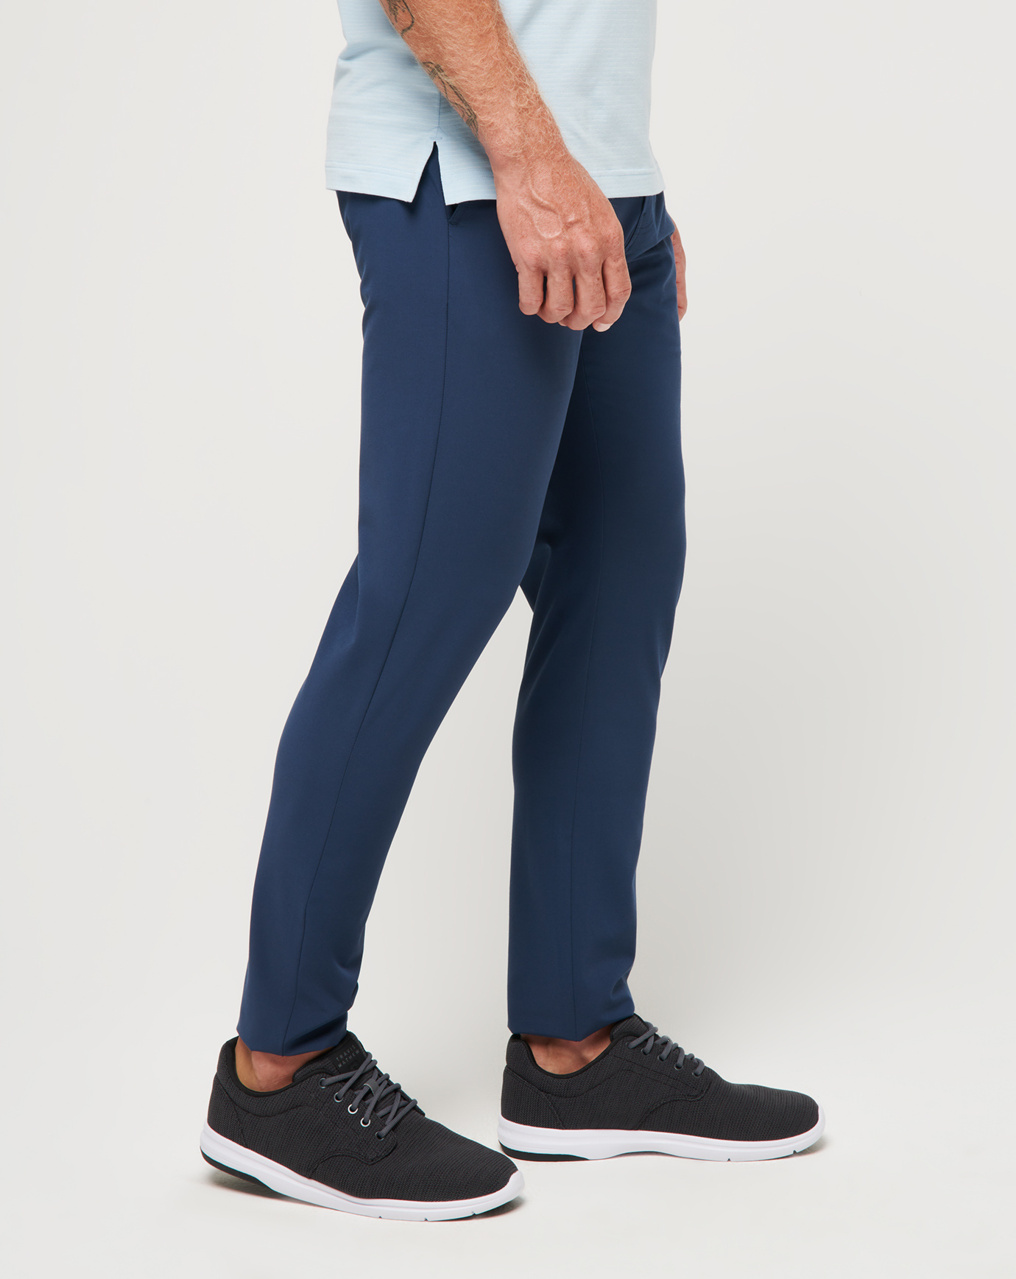 Daily Outfit Ideas: Lululemon ABC Classic-Fit Pant - Modern Future  Mens  fashion streetwear, Mens streetwear, Sweatshirt short sleeve